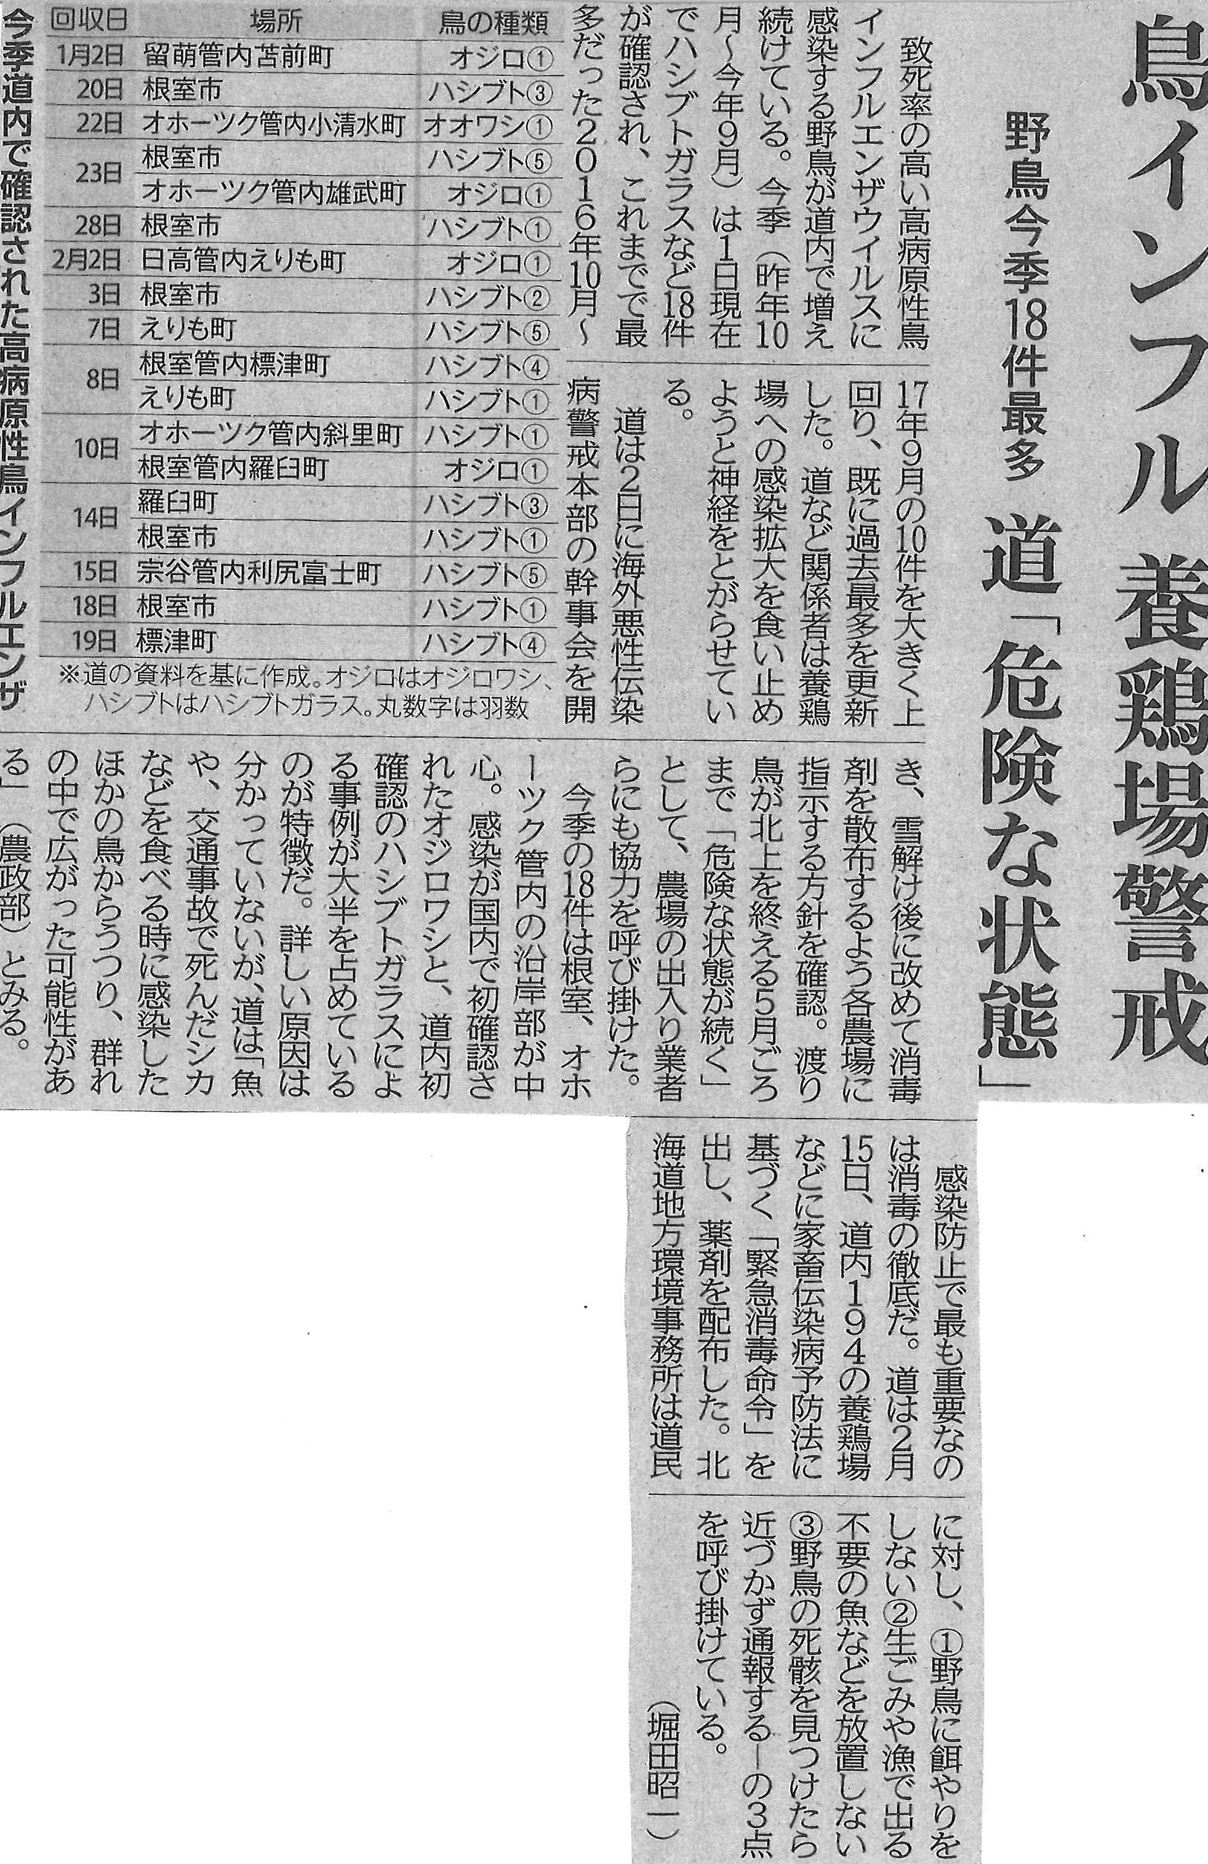 Hokkaido Shimbun article